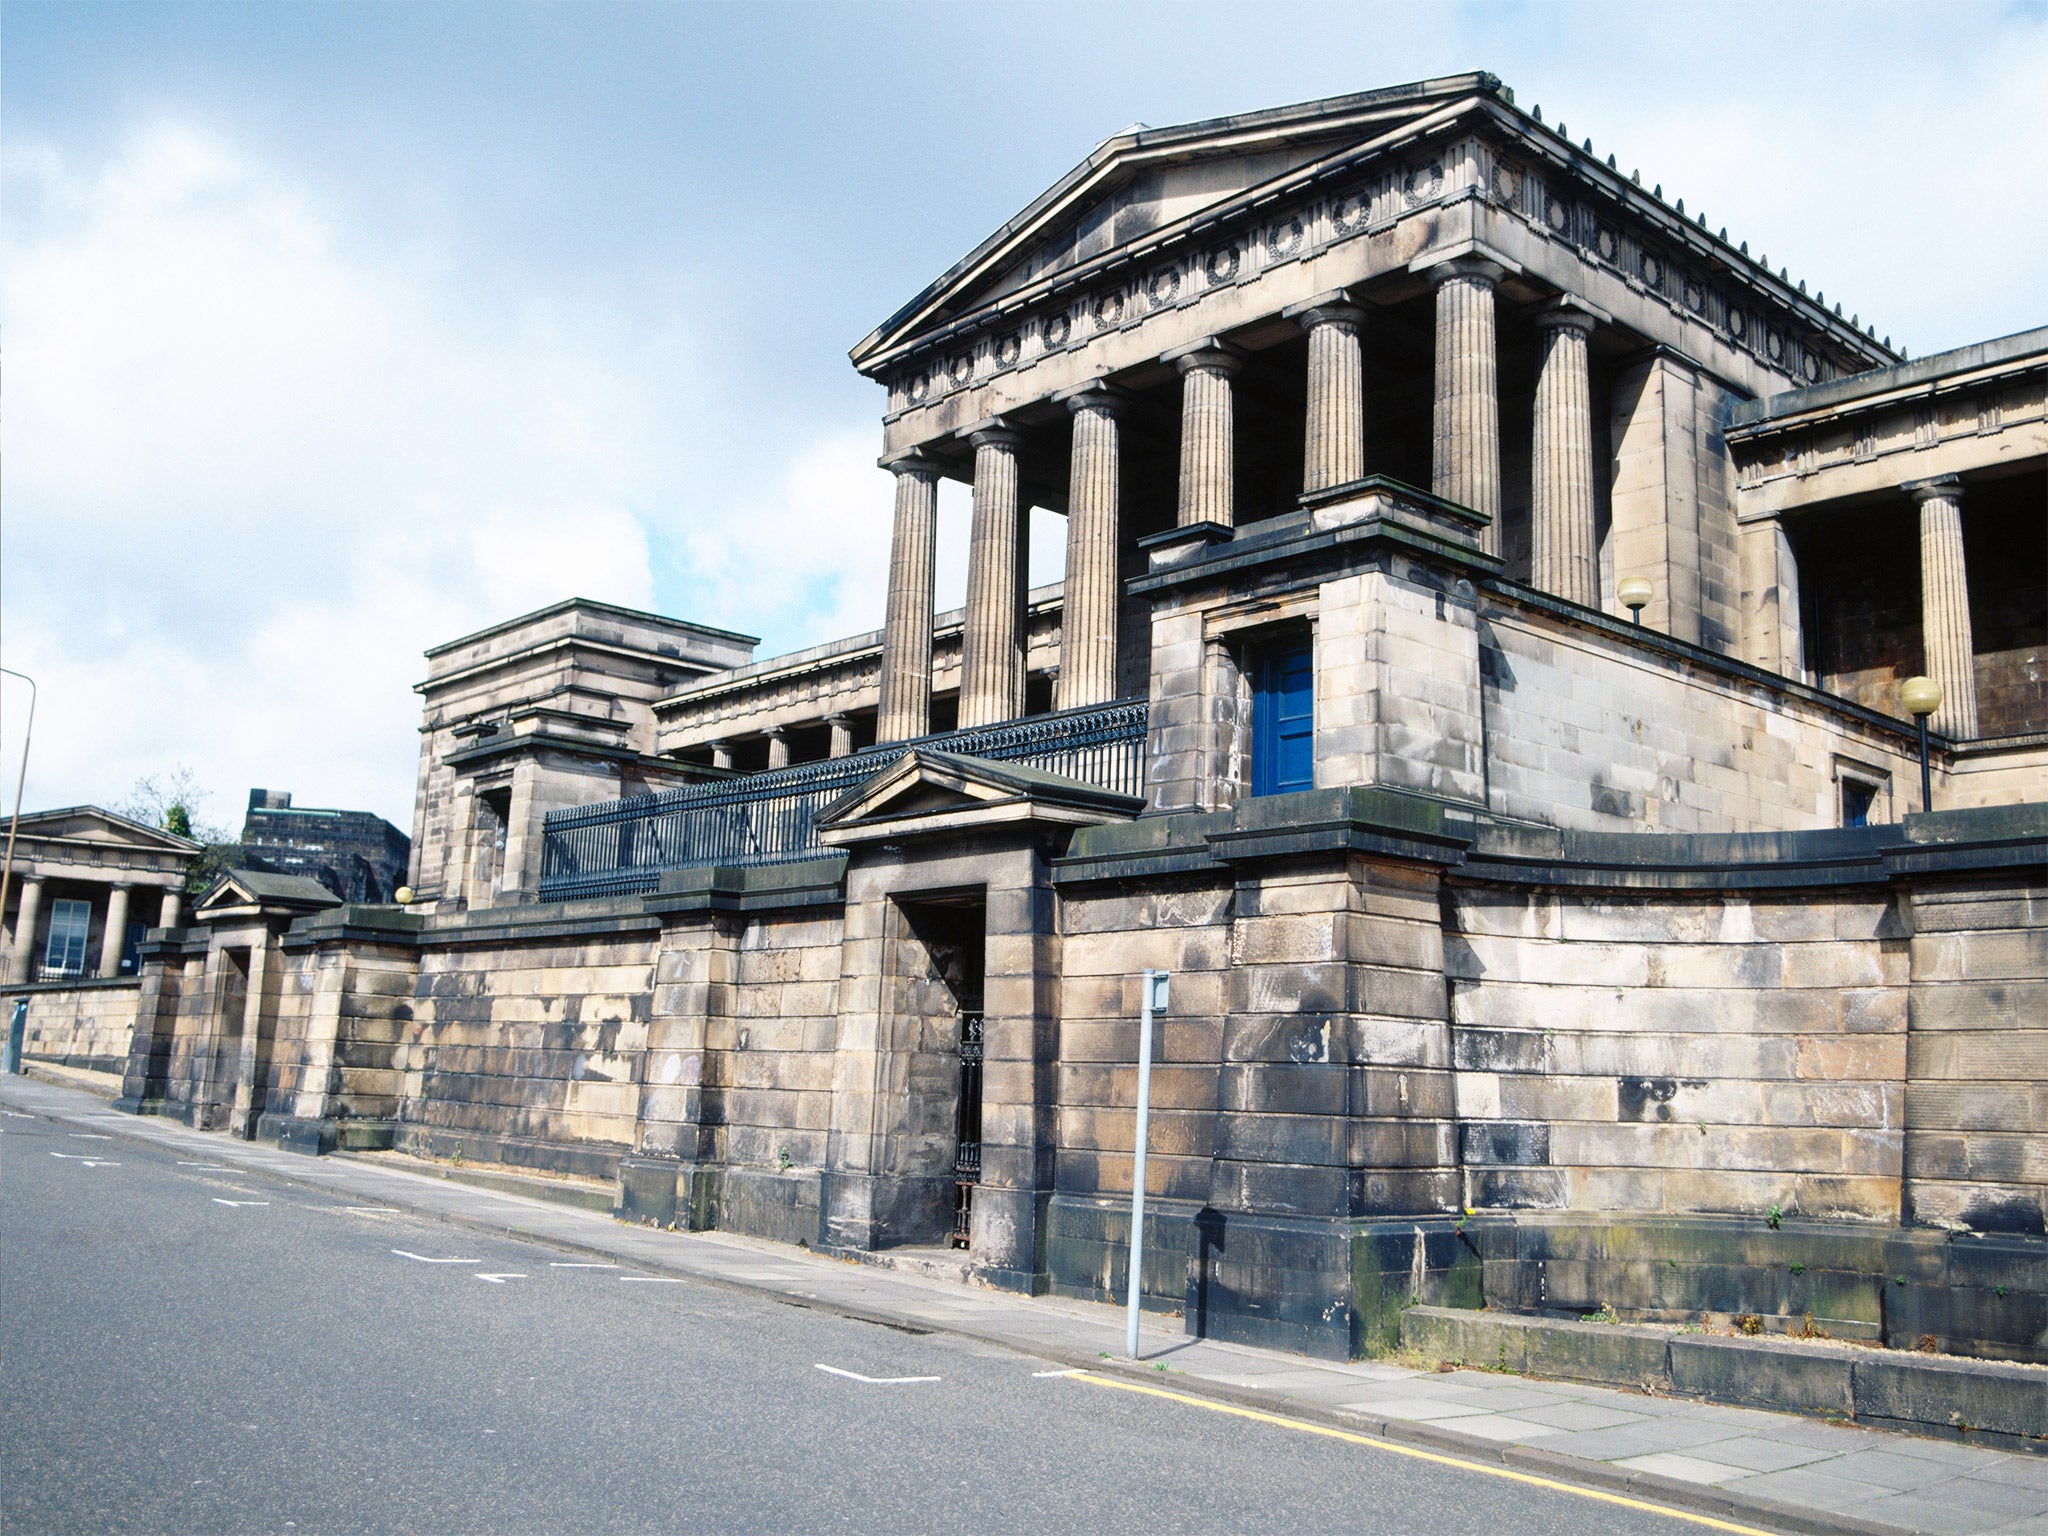 Edinburgh’s Old Royal High School has fallen into disrepair